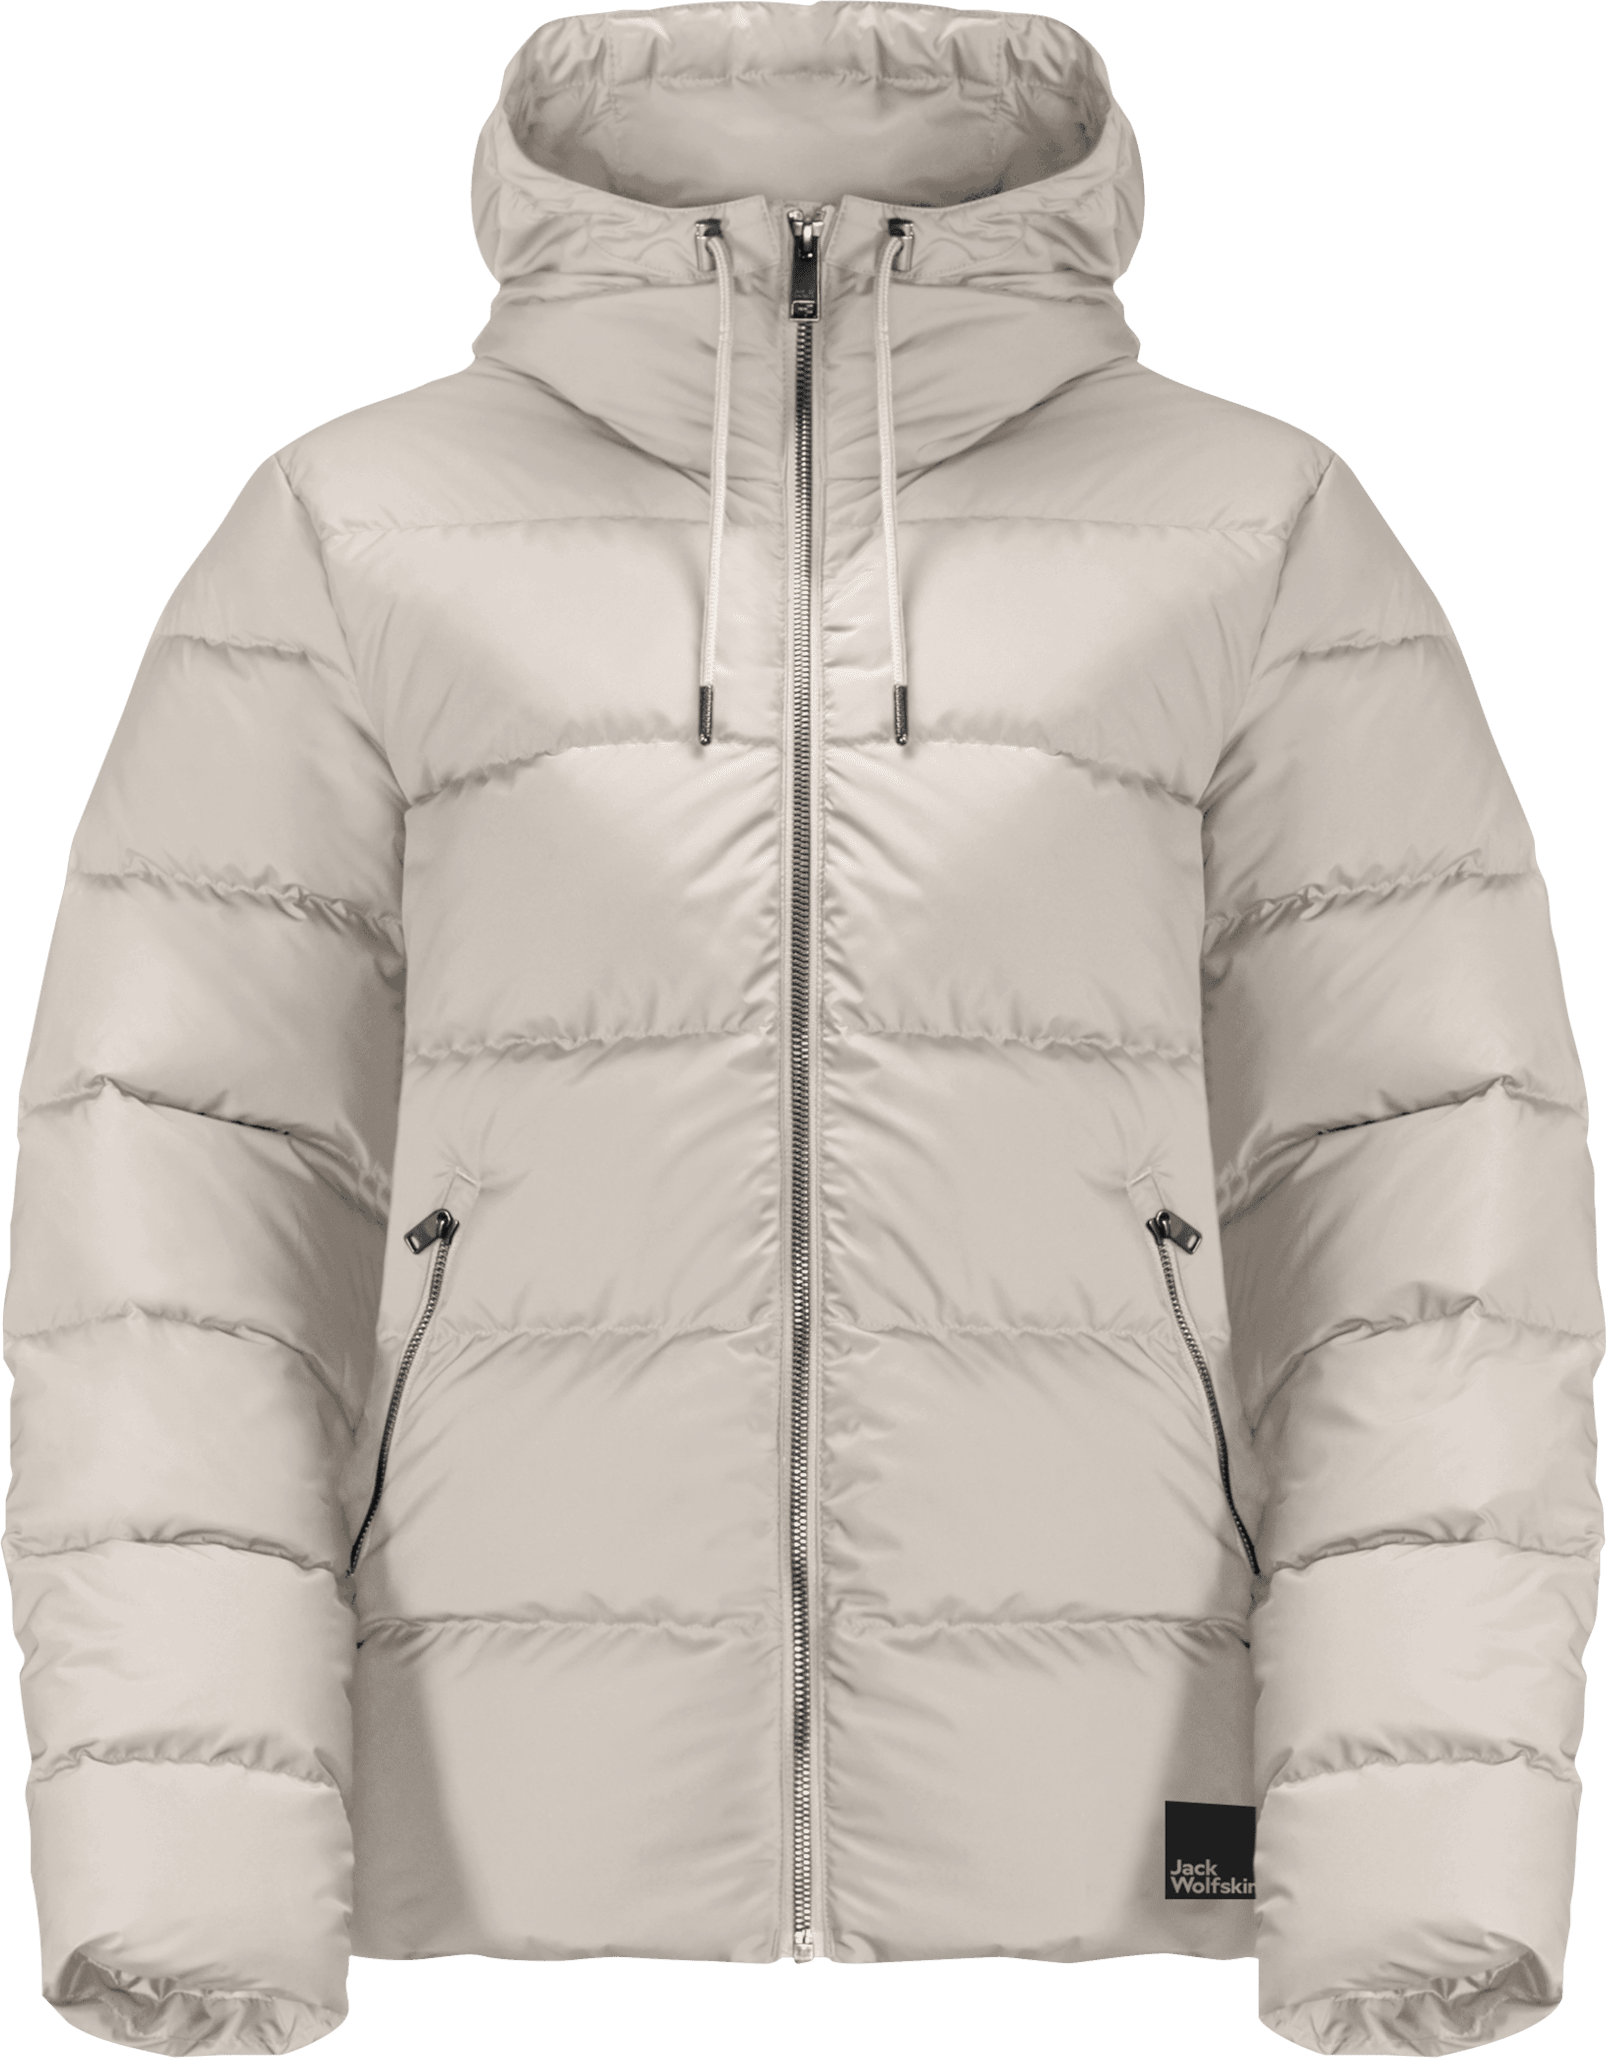 Køb Wolfskin Women's Frozen Jacket fra Outnorth